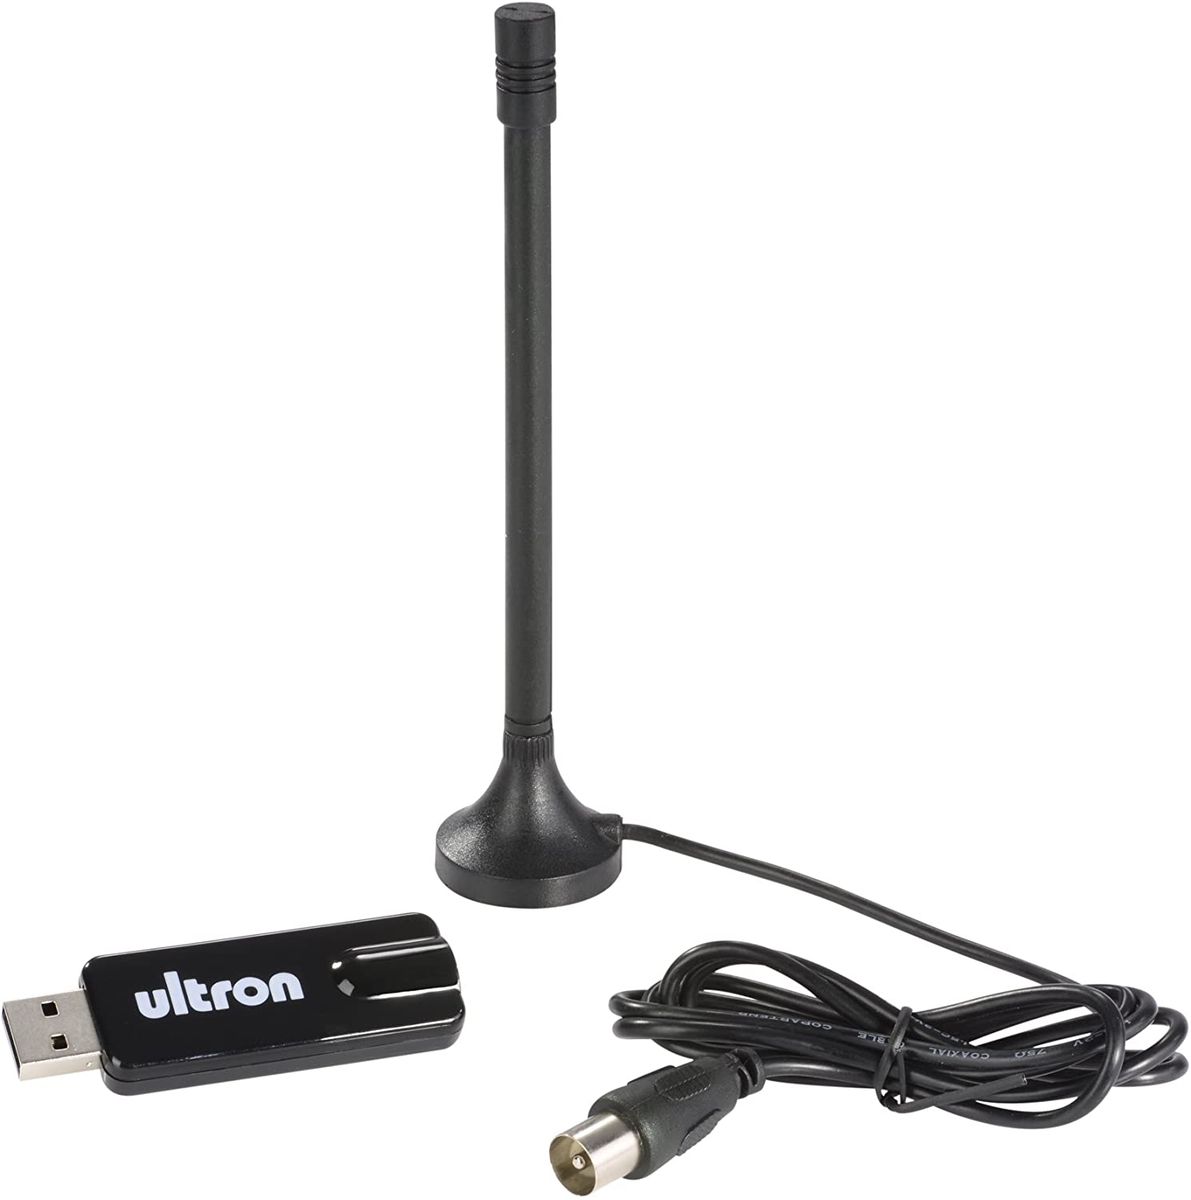 Ultron 145248 TV tuner card DVB-T USB